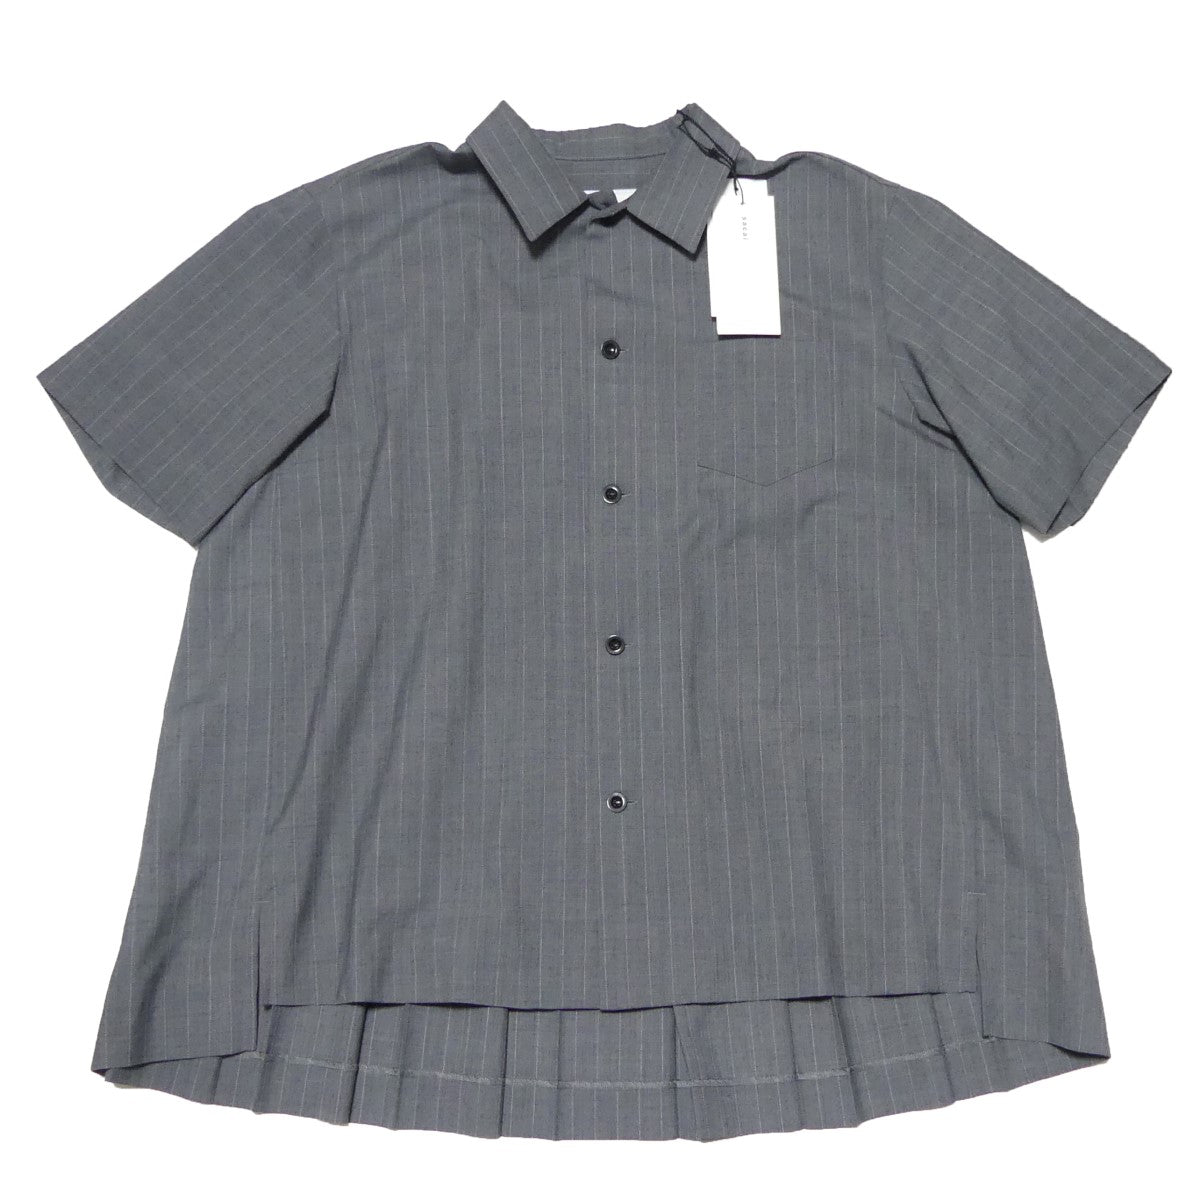 sacai(サカイ) 24SS Chalk Stripe Shirt チョーク ストライプ バックプリーツ シャツ